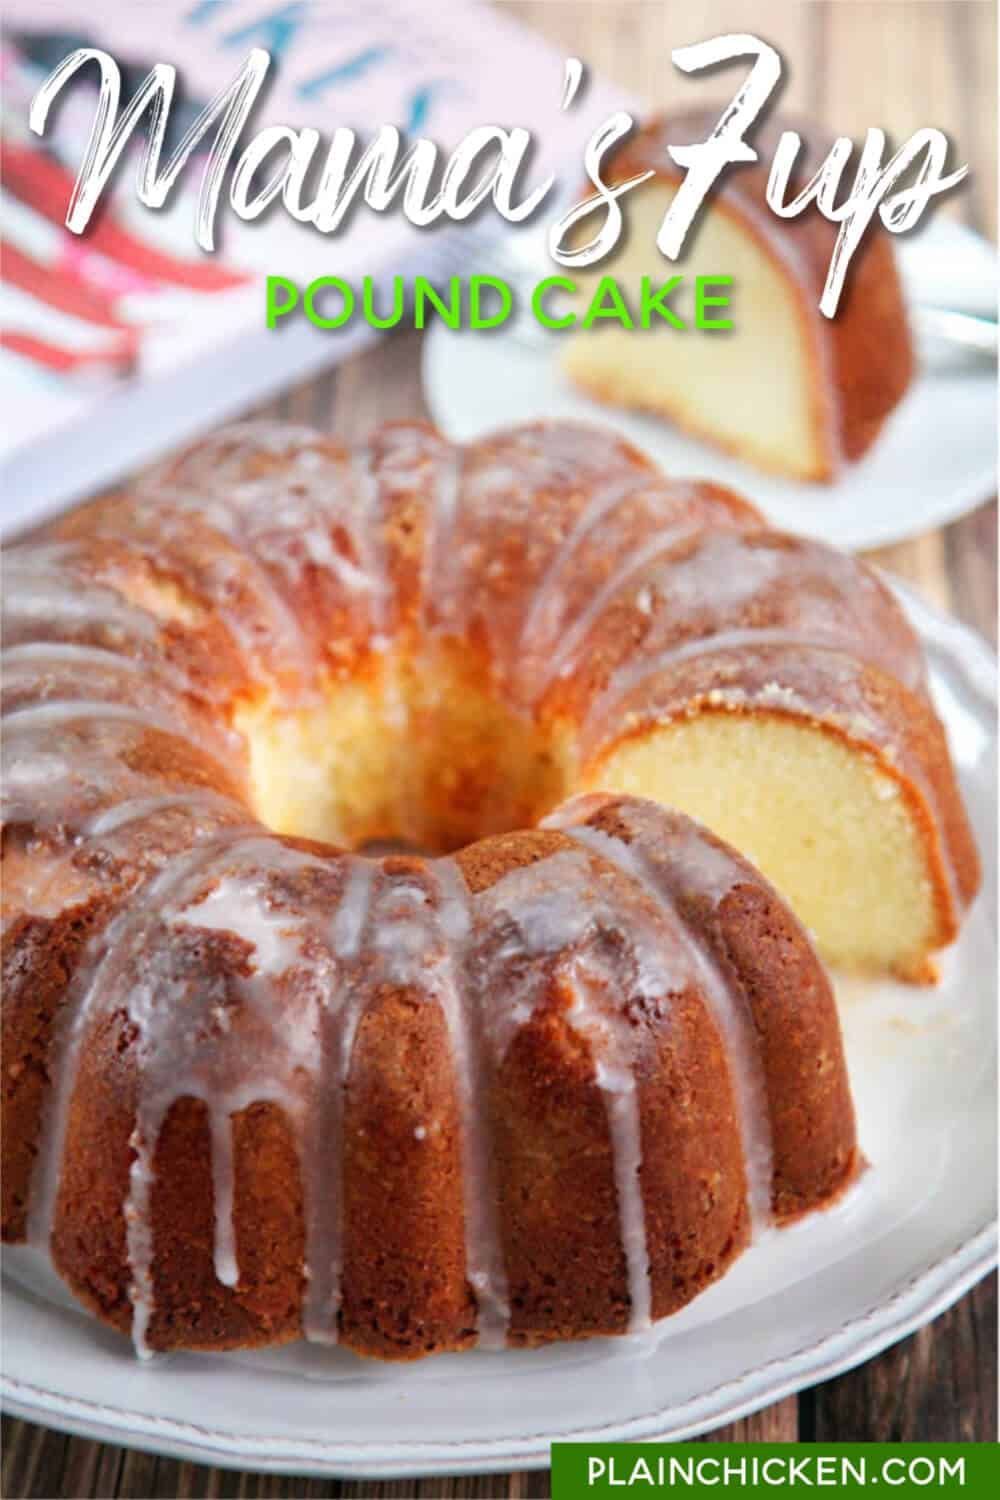 7up Pound Cake Recipe With Cake Flour